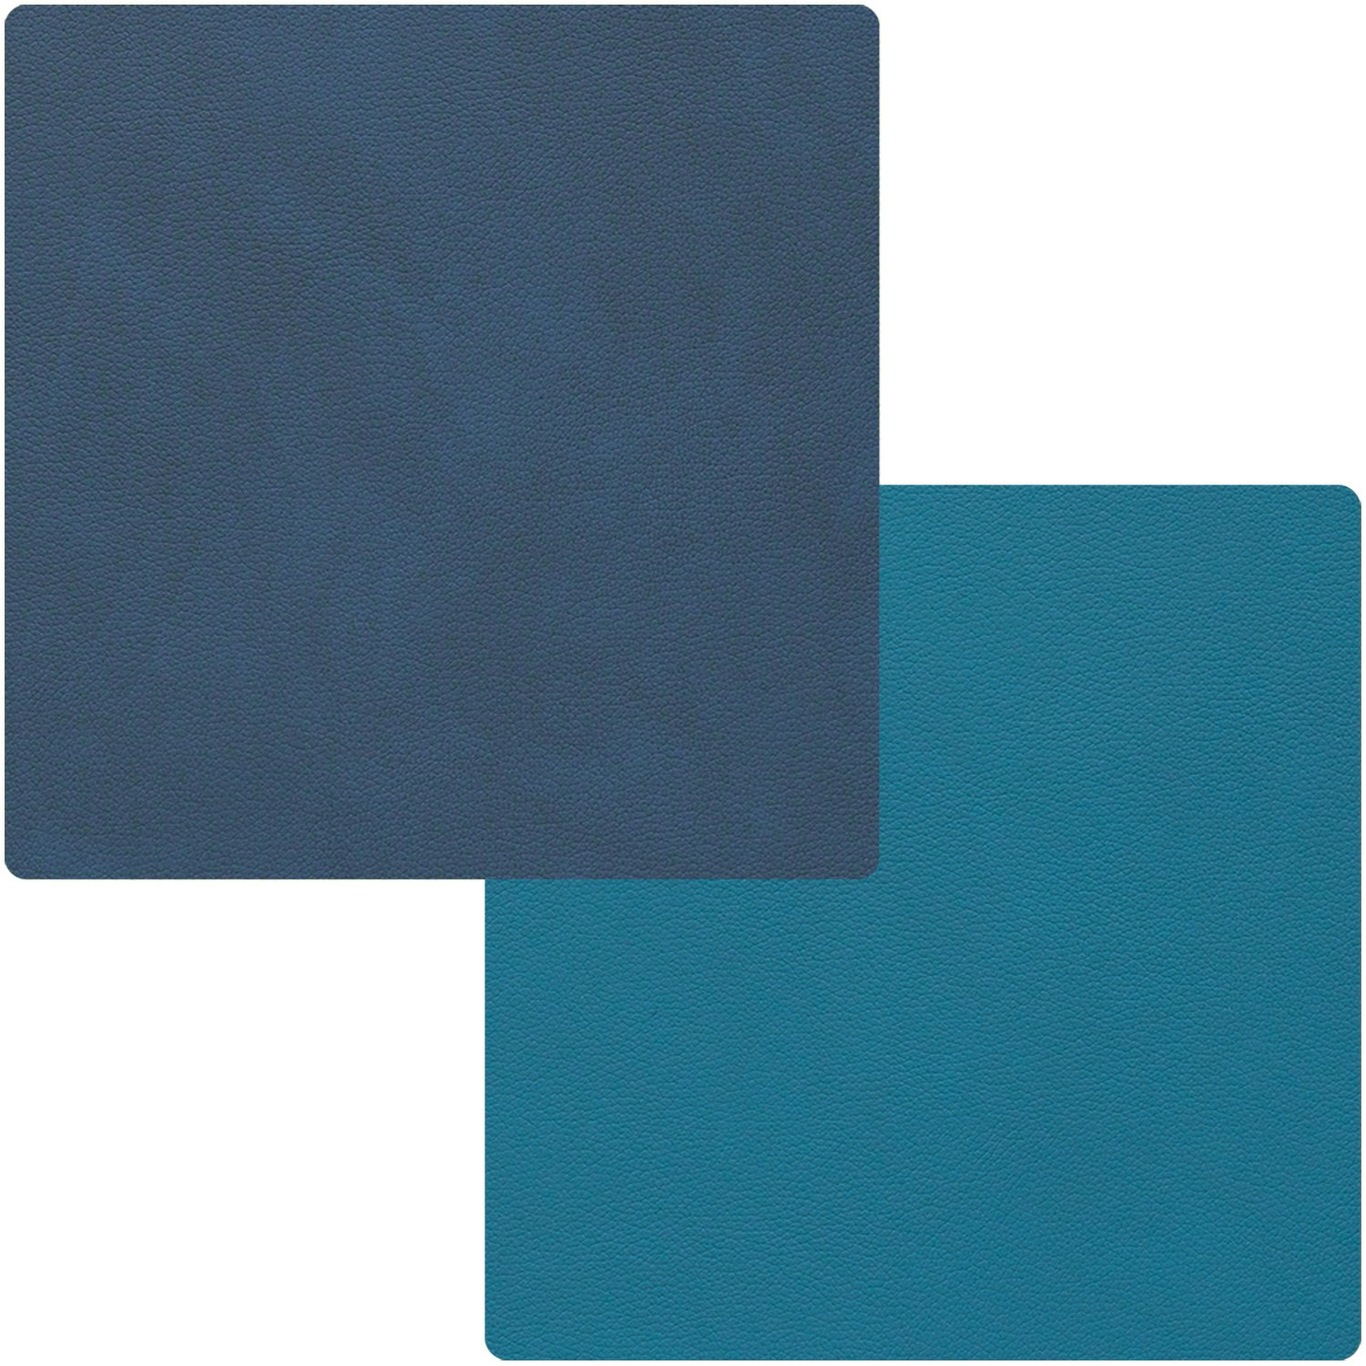 Square Reversible Coaster 10x10 cm, Midnight Blue/Petrol